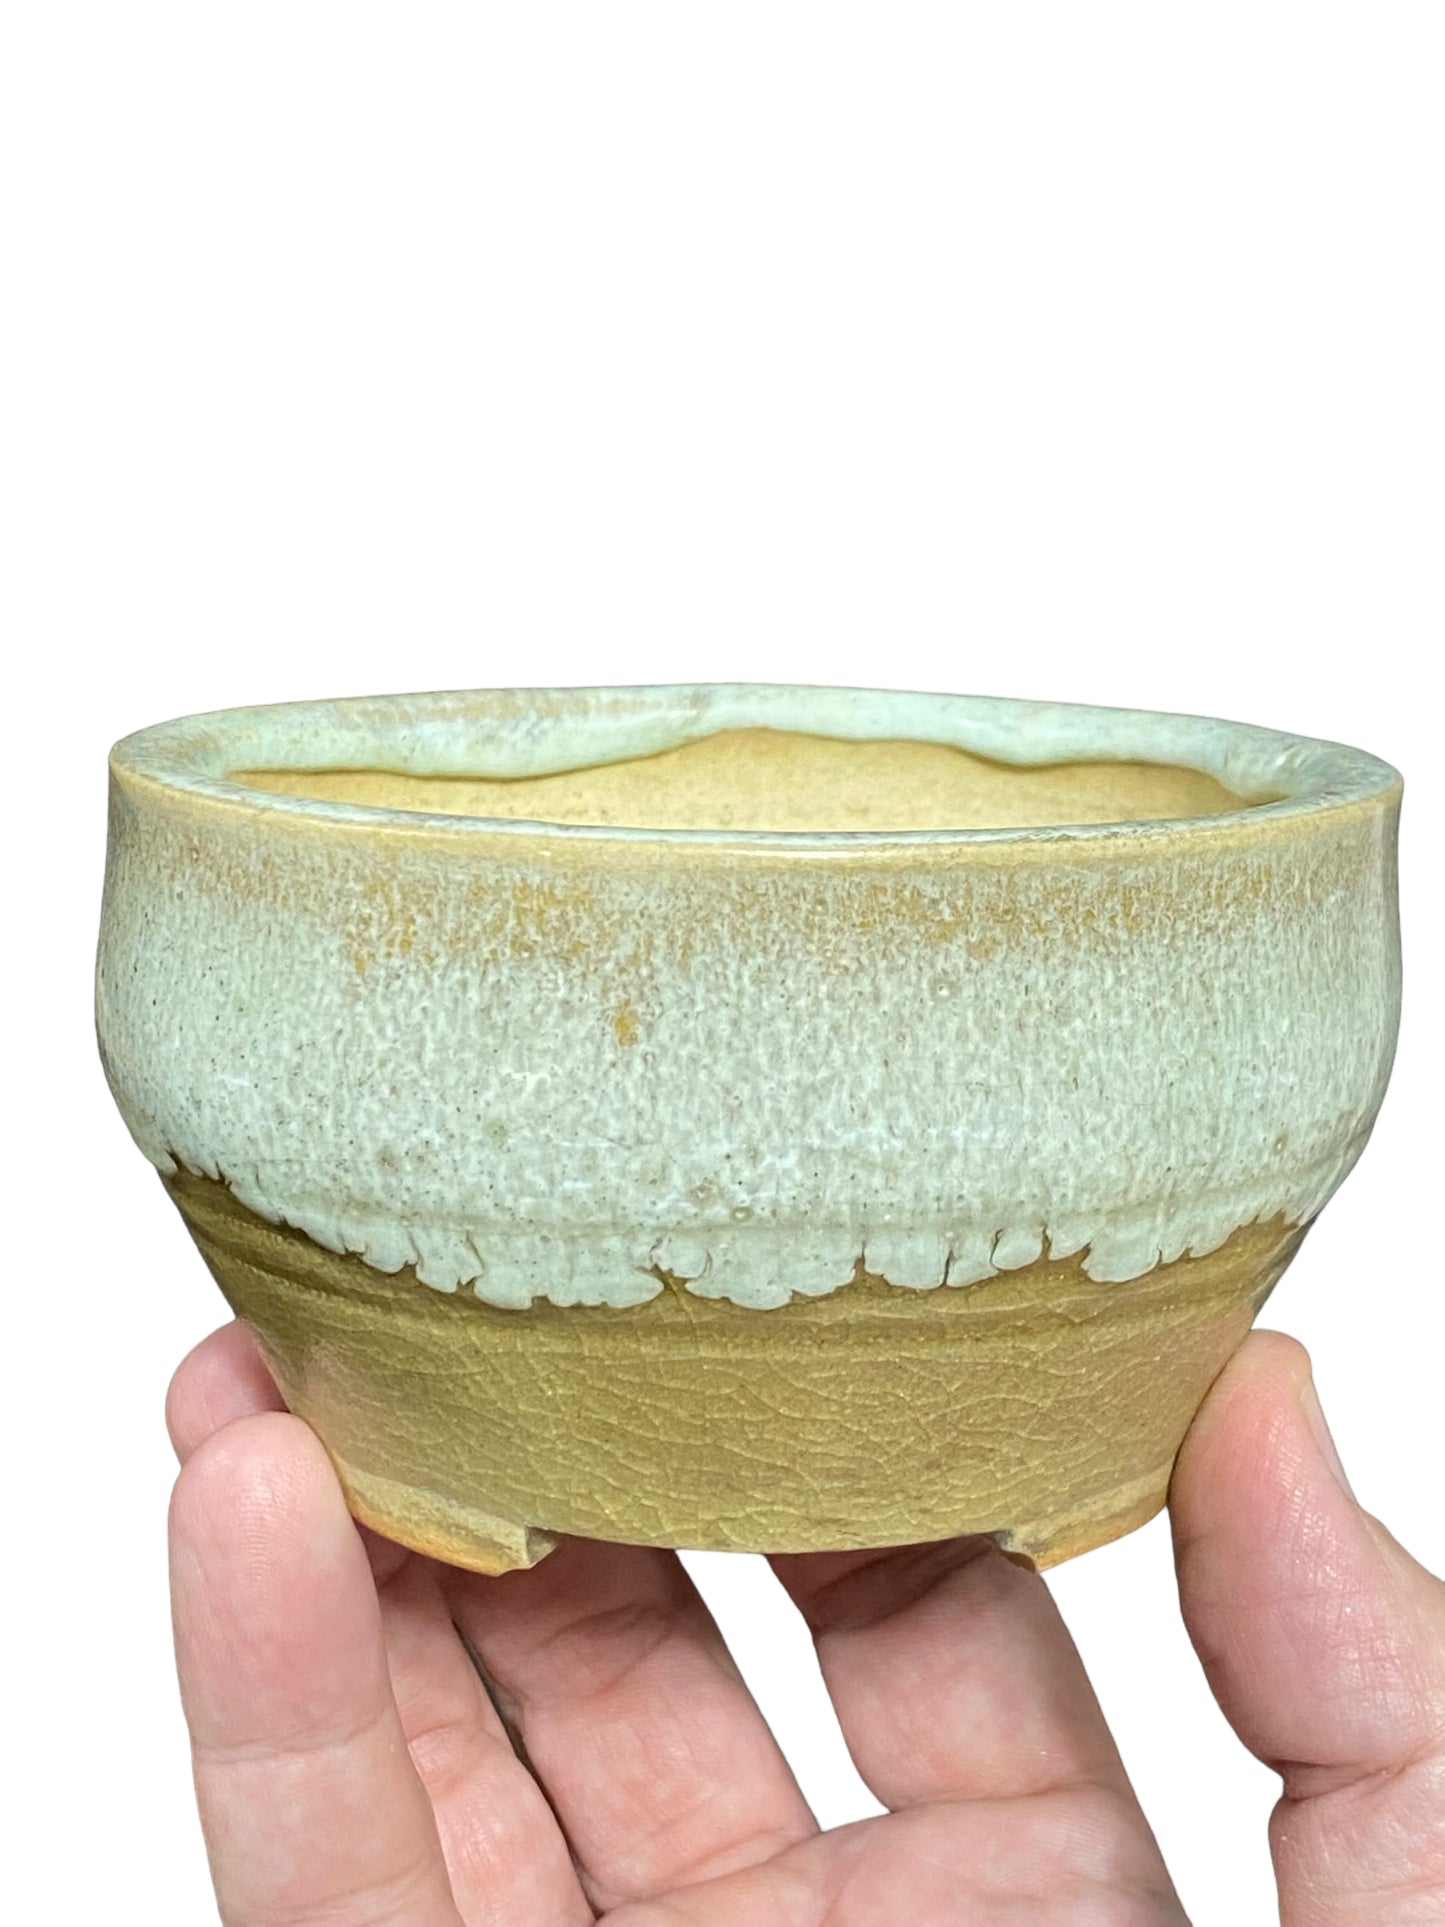 Yozan - Old Multicolor Glazed Bowl Bonsai Pot